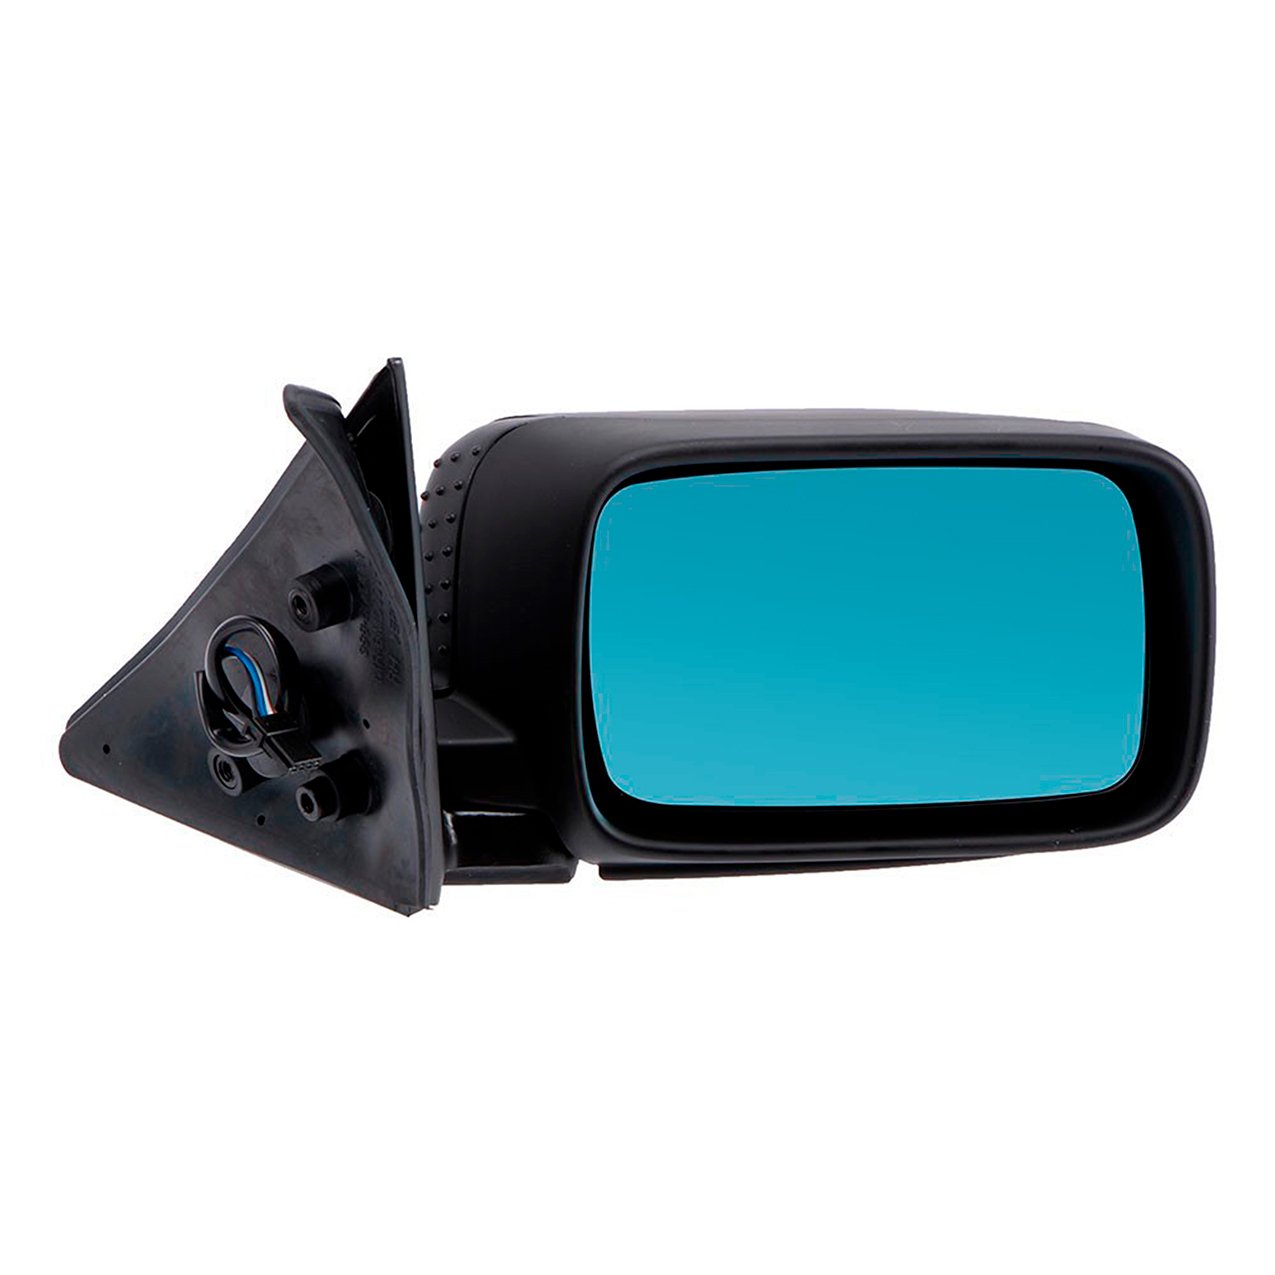 Bmw E36 Coupe Kare Ayna Orijinal Tip Sağ Taraf